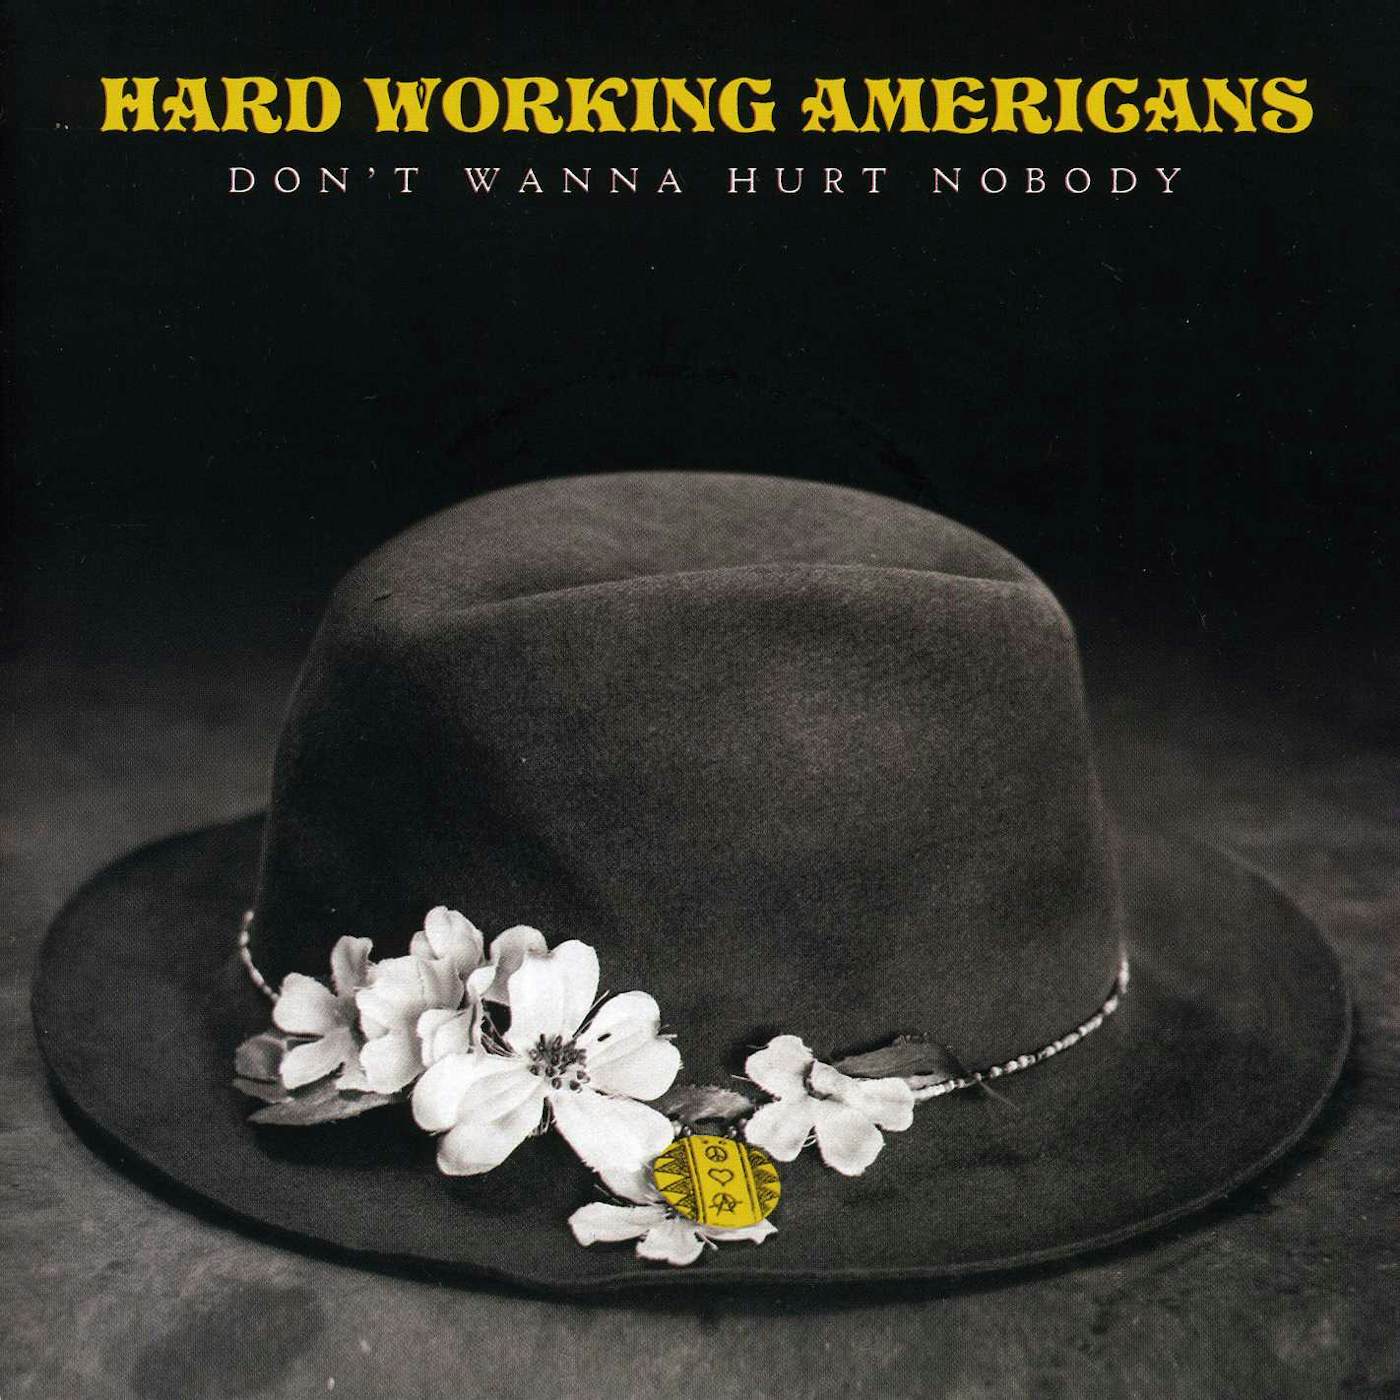 Hard Working Americans DON'T WANNA HURT NOBODY Vinyl Record